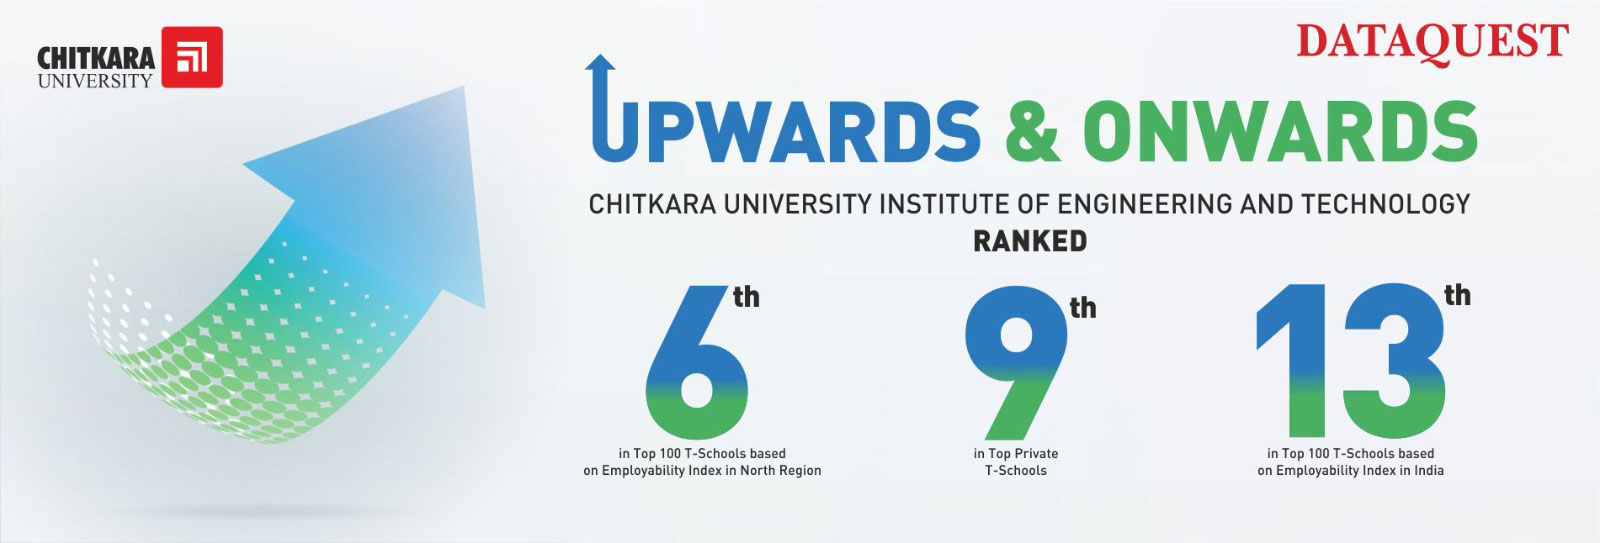 Top Rankings in Dataquest Survey - Chitkara University